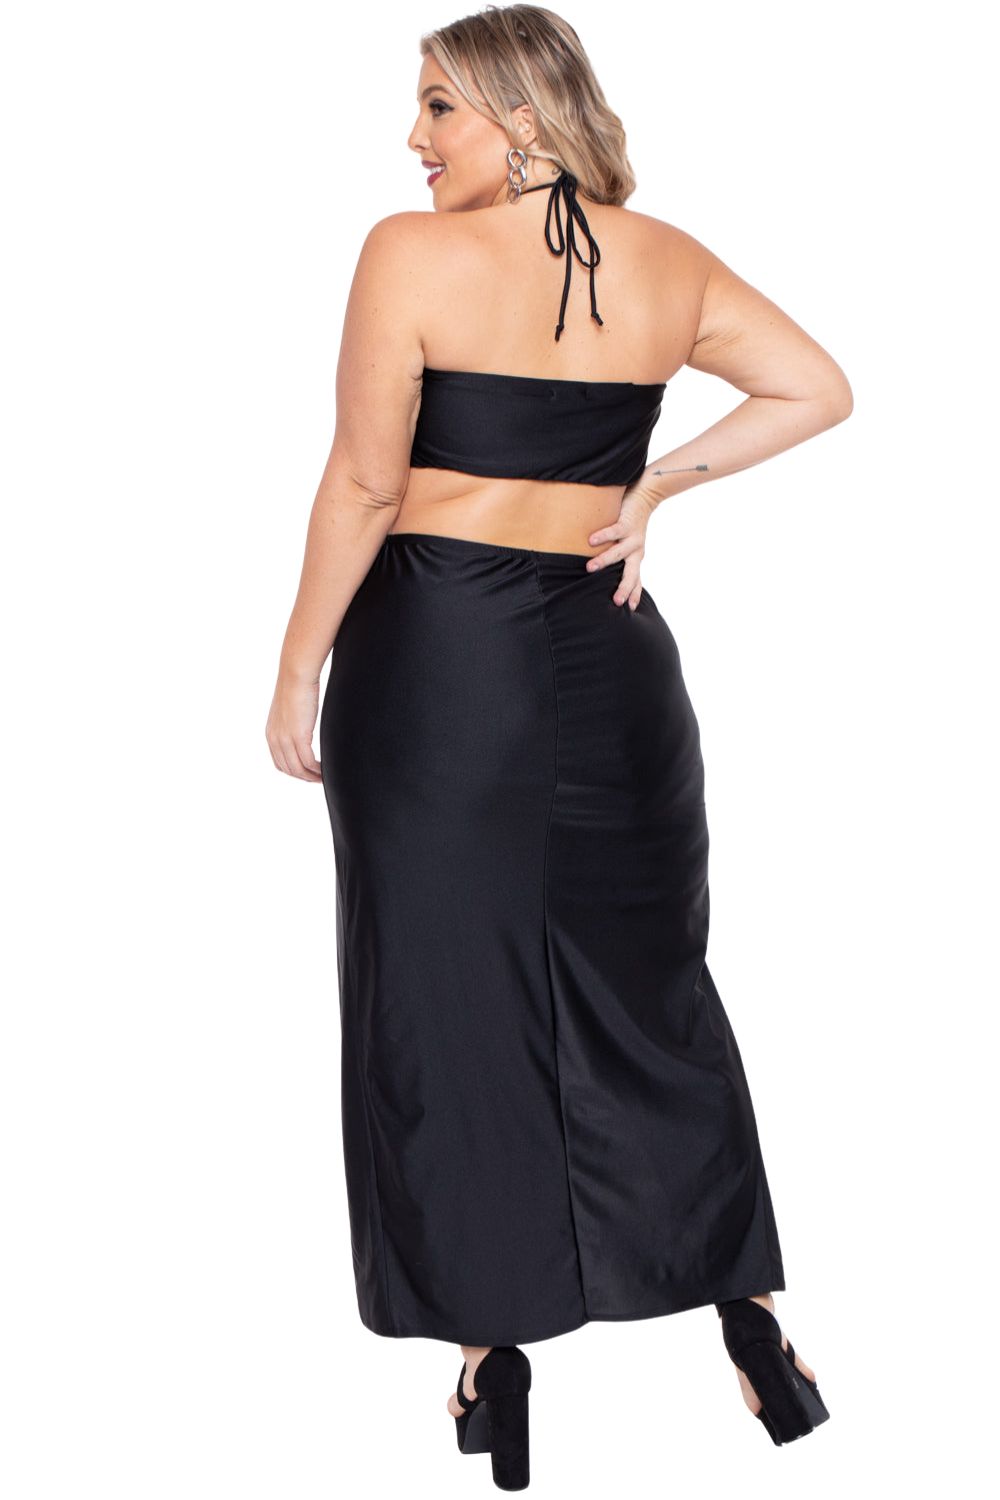 Curvy Sense Dresses Plus Size Layana Double Slit Dress- Black